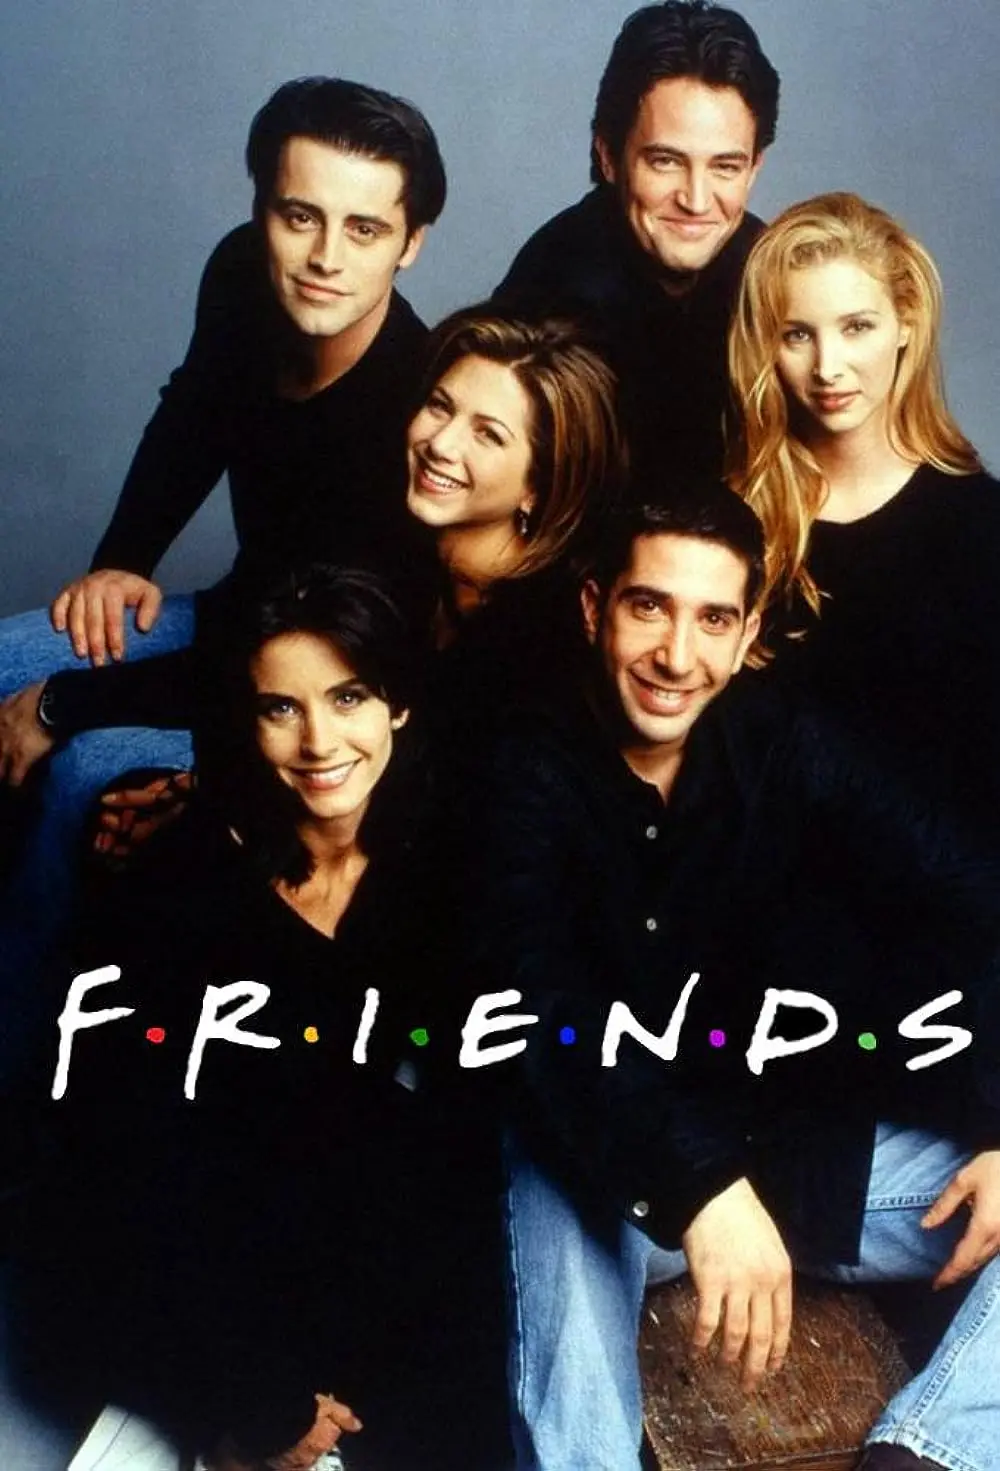 Friends (TV Series) (2000-2002)